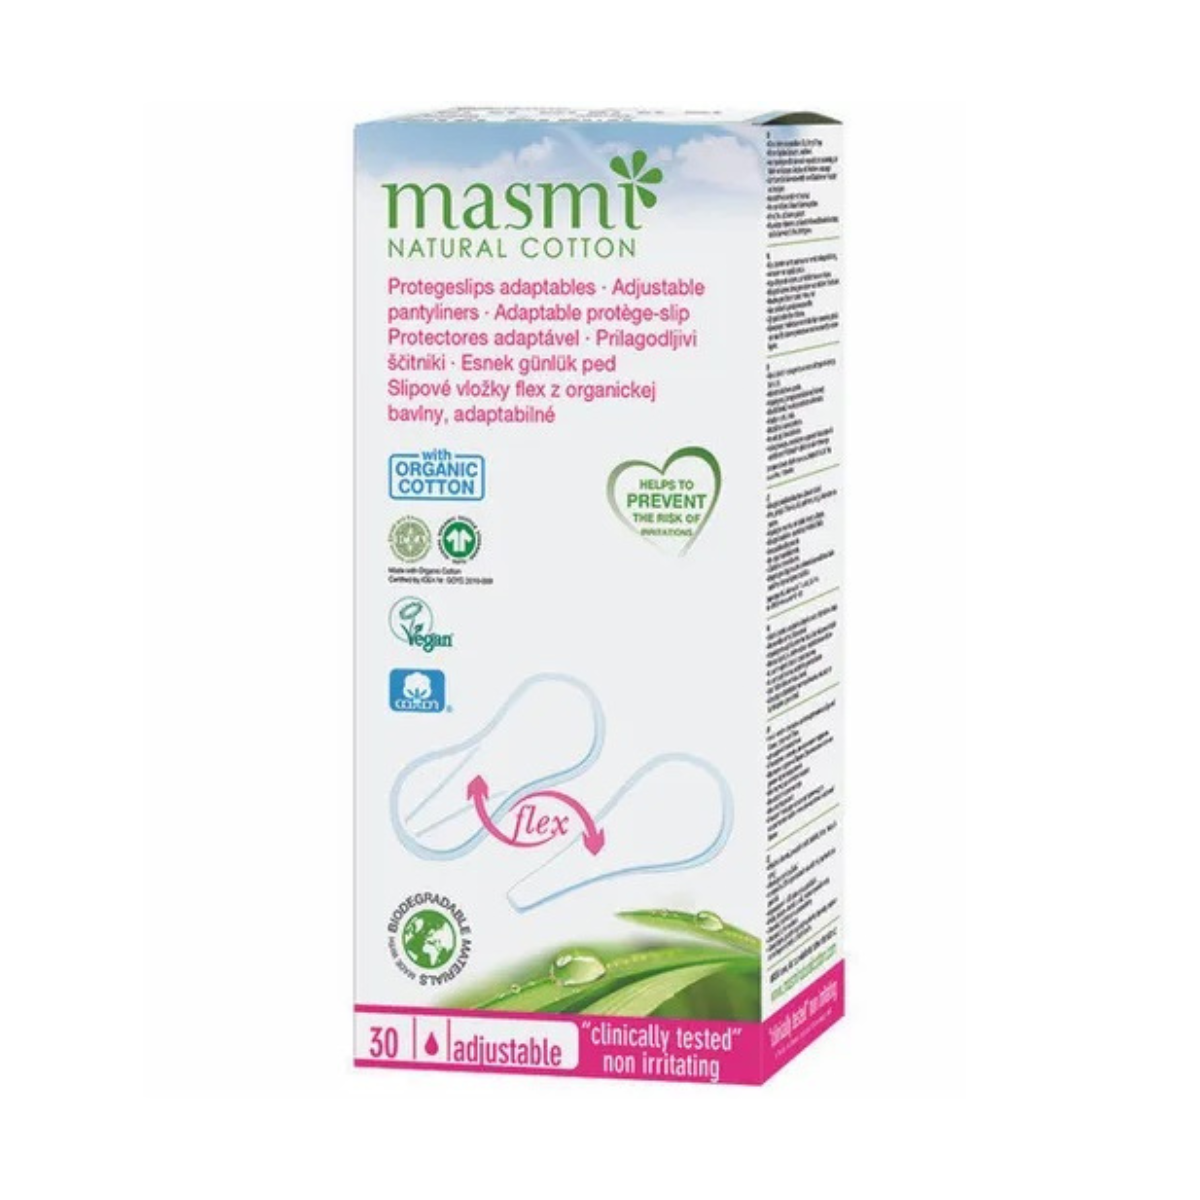 Daily sanitary napkins flex organic 30m -masmi